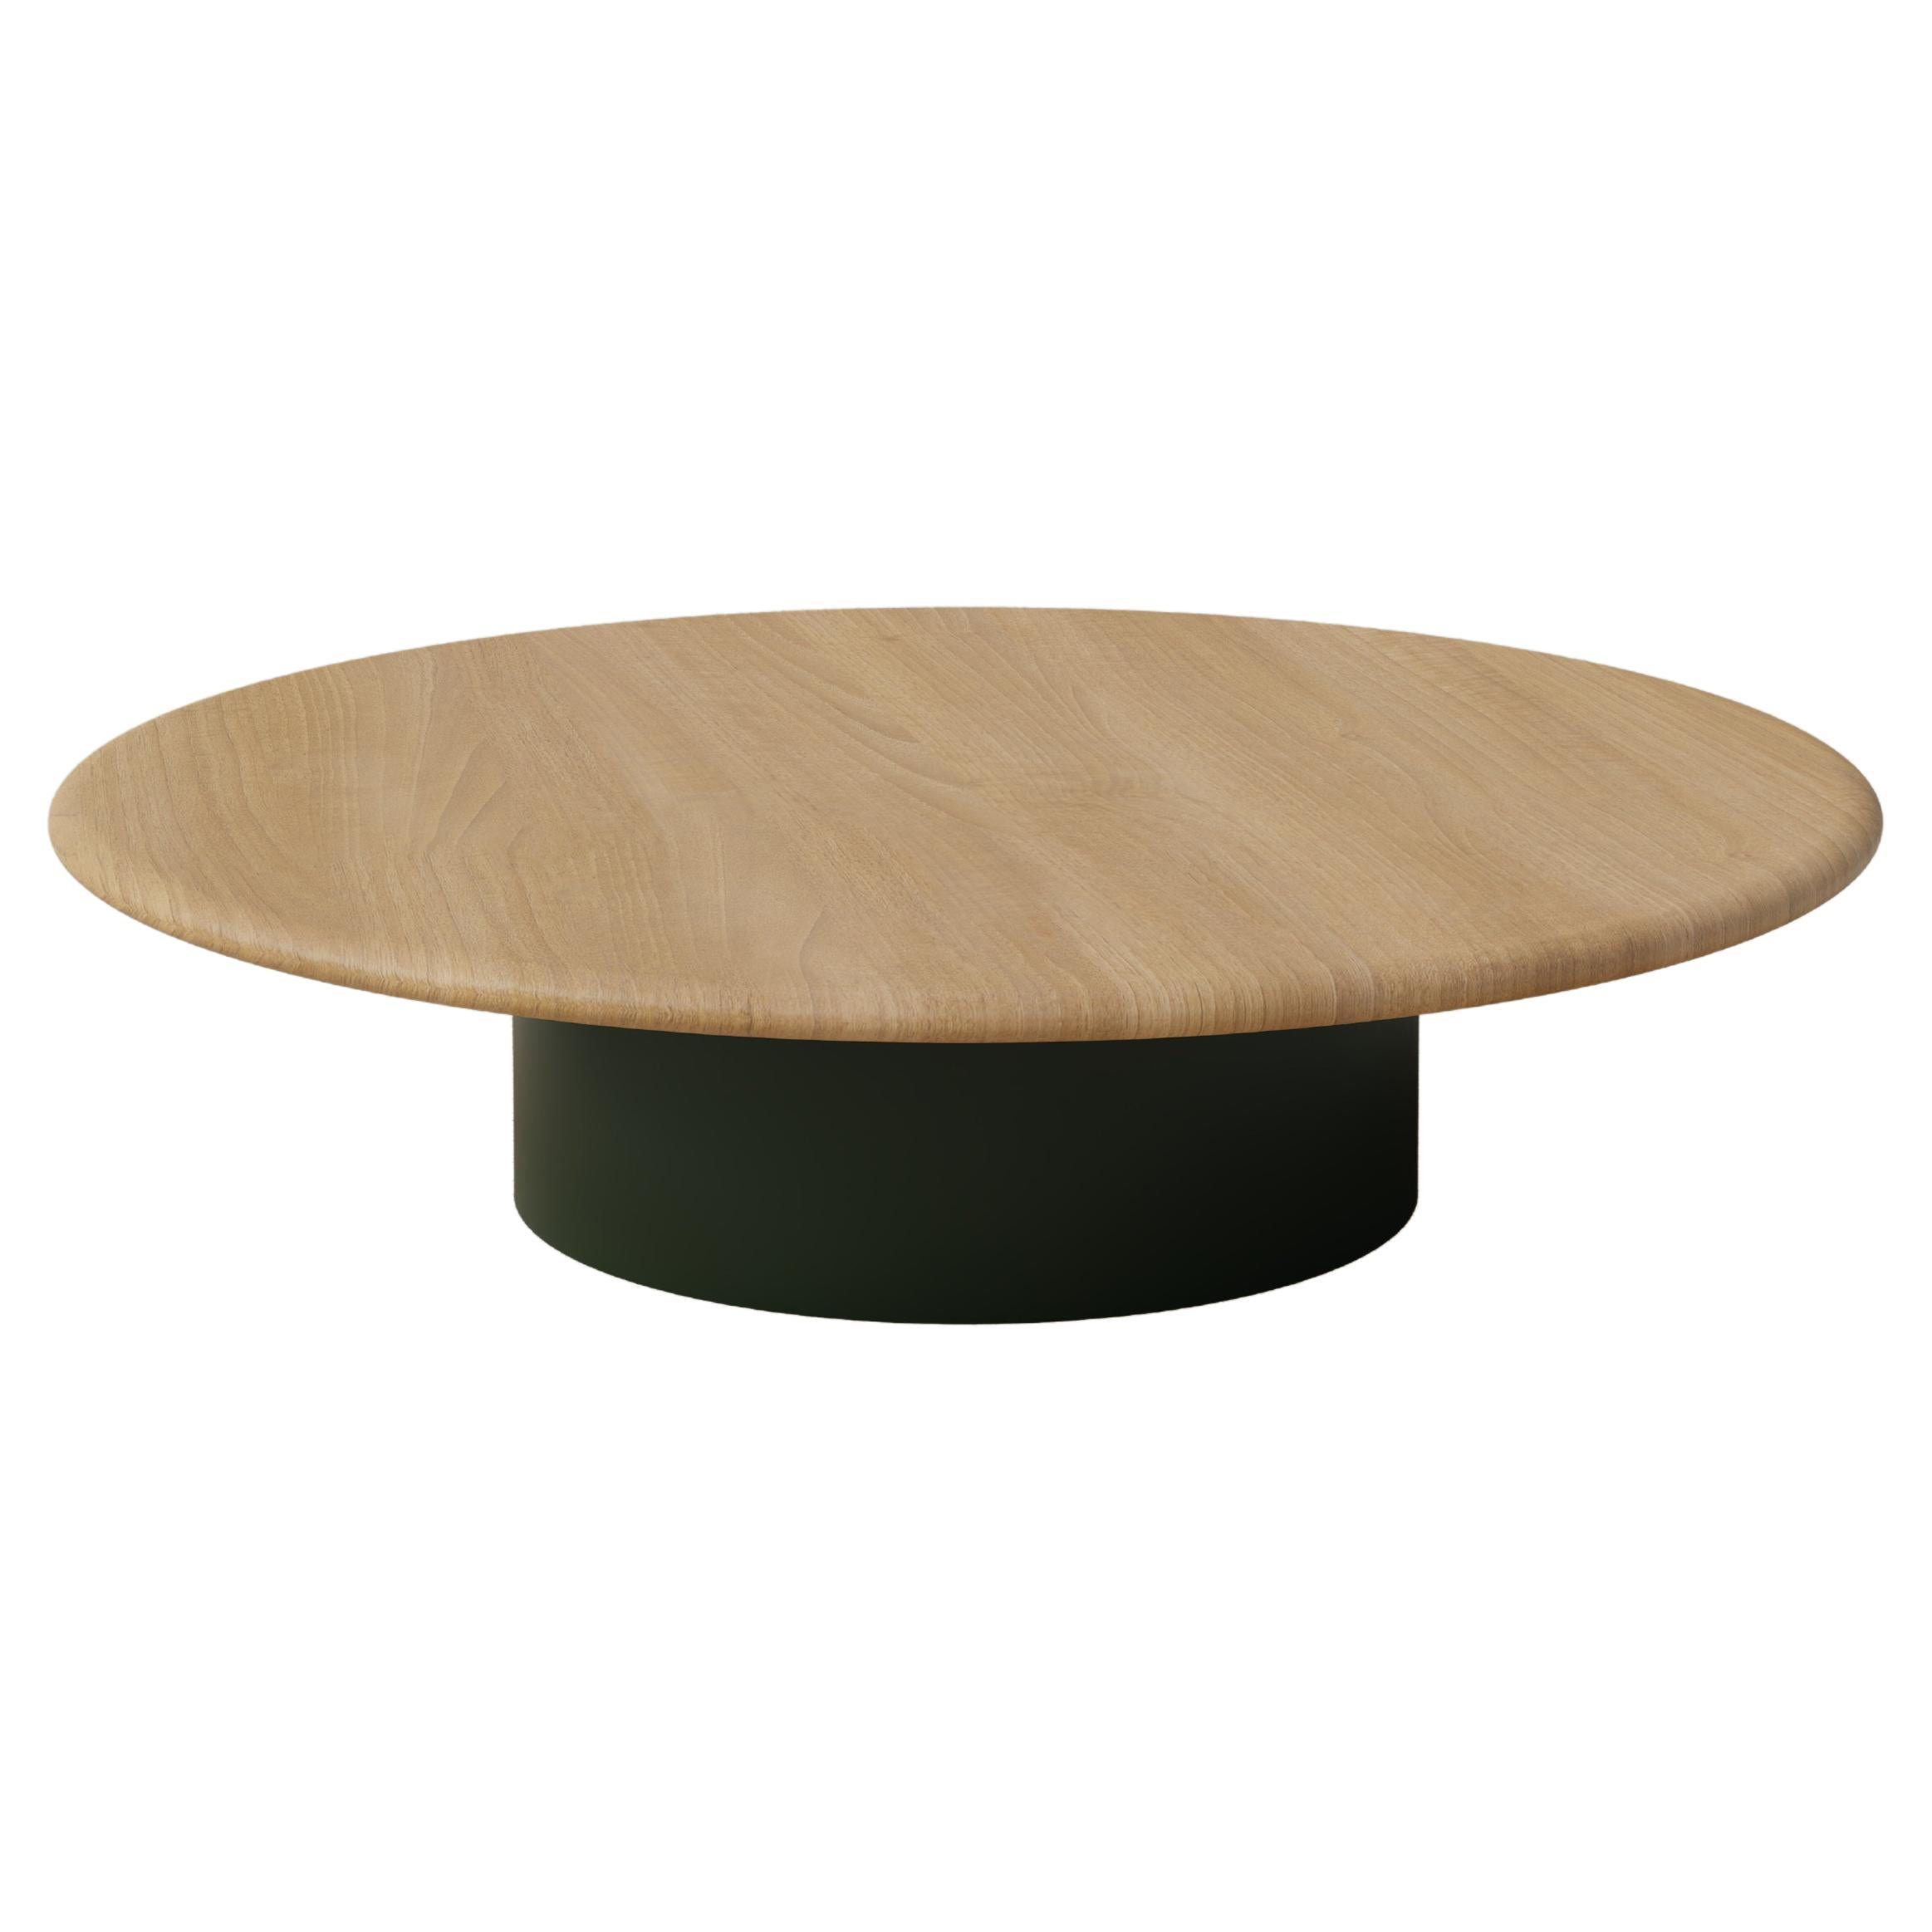 Raindrop Coffee Table, 1000, Oak / Moss Green For Sale